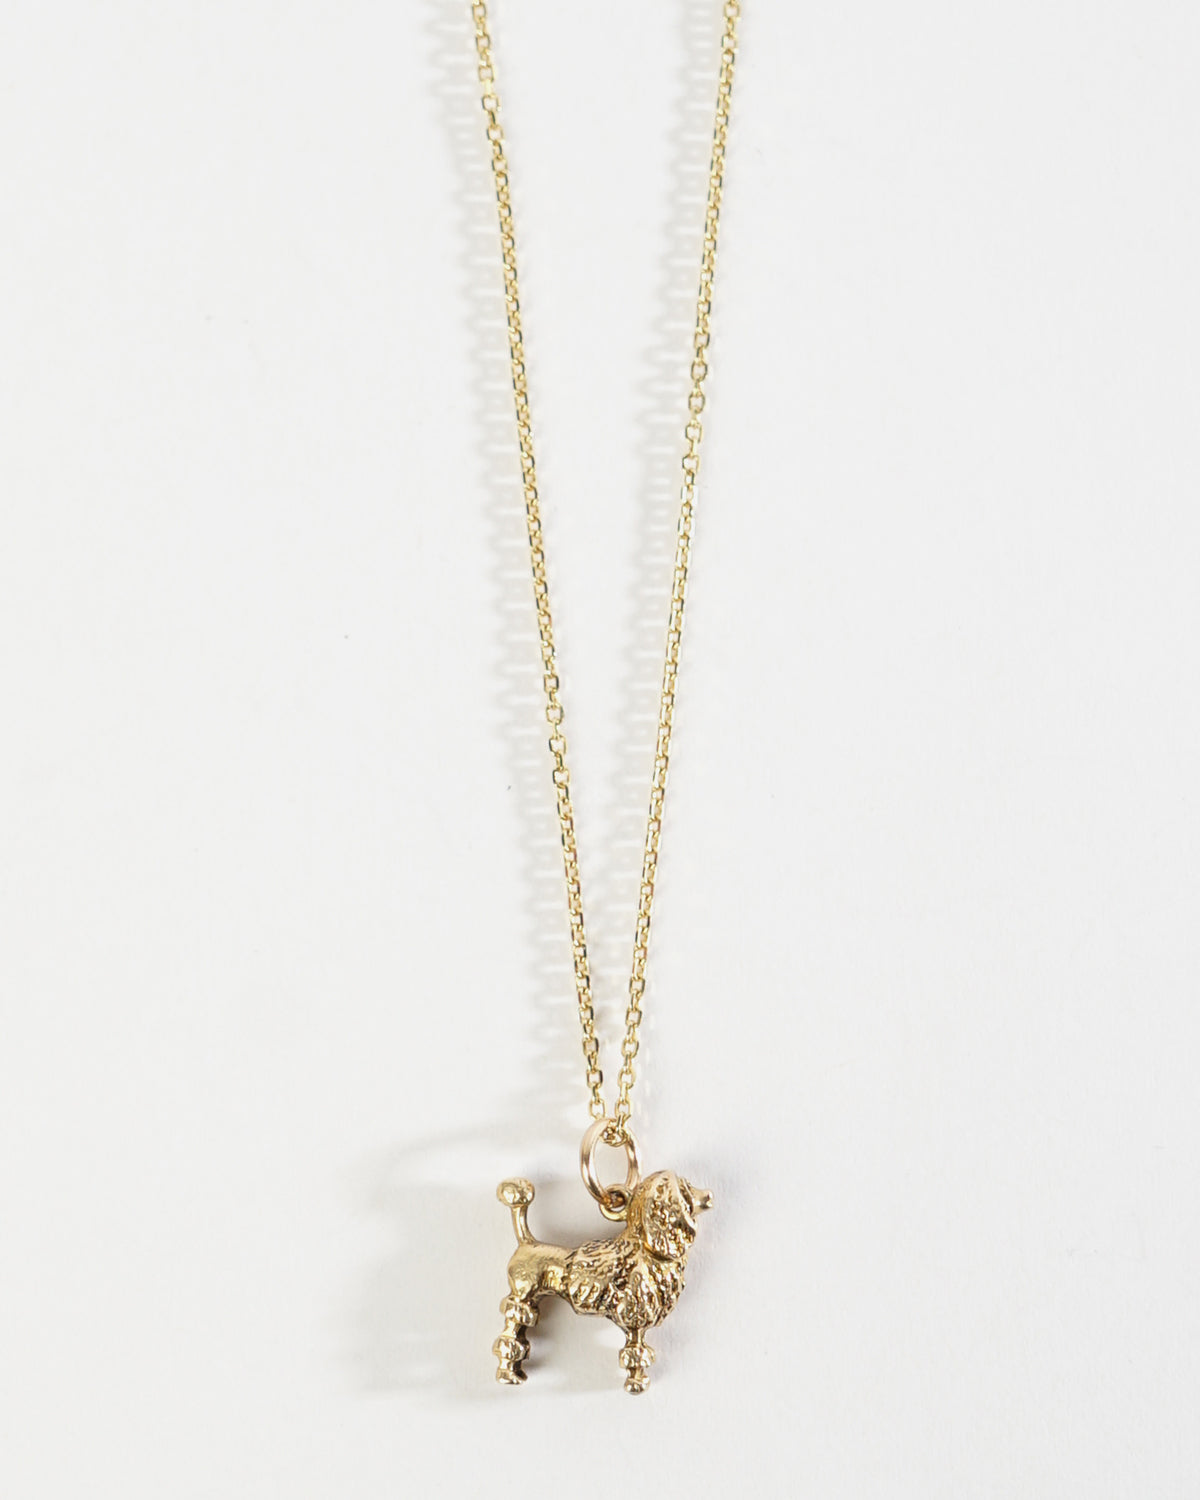 14k Gold Chain Necklace w/ Dog Charm